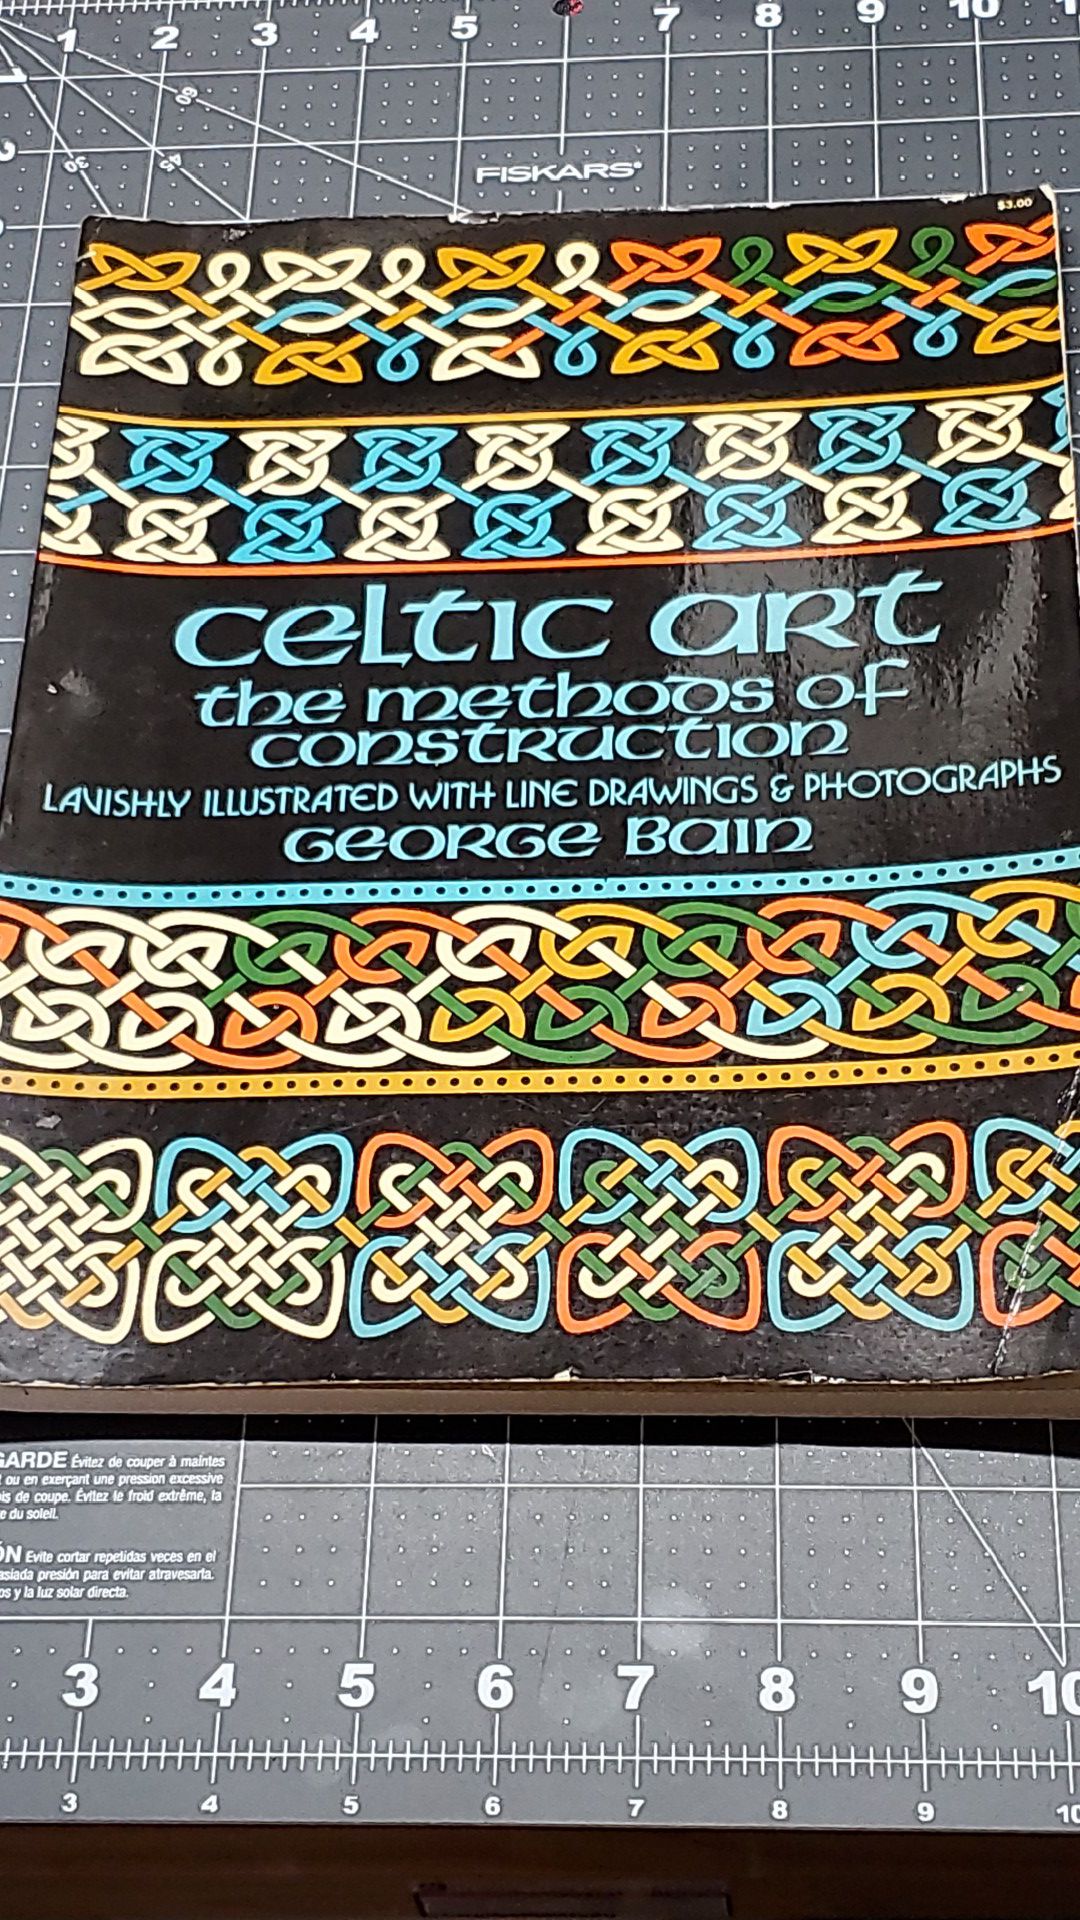 Celtic Art Book